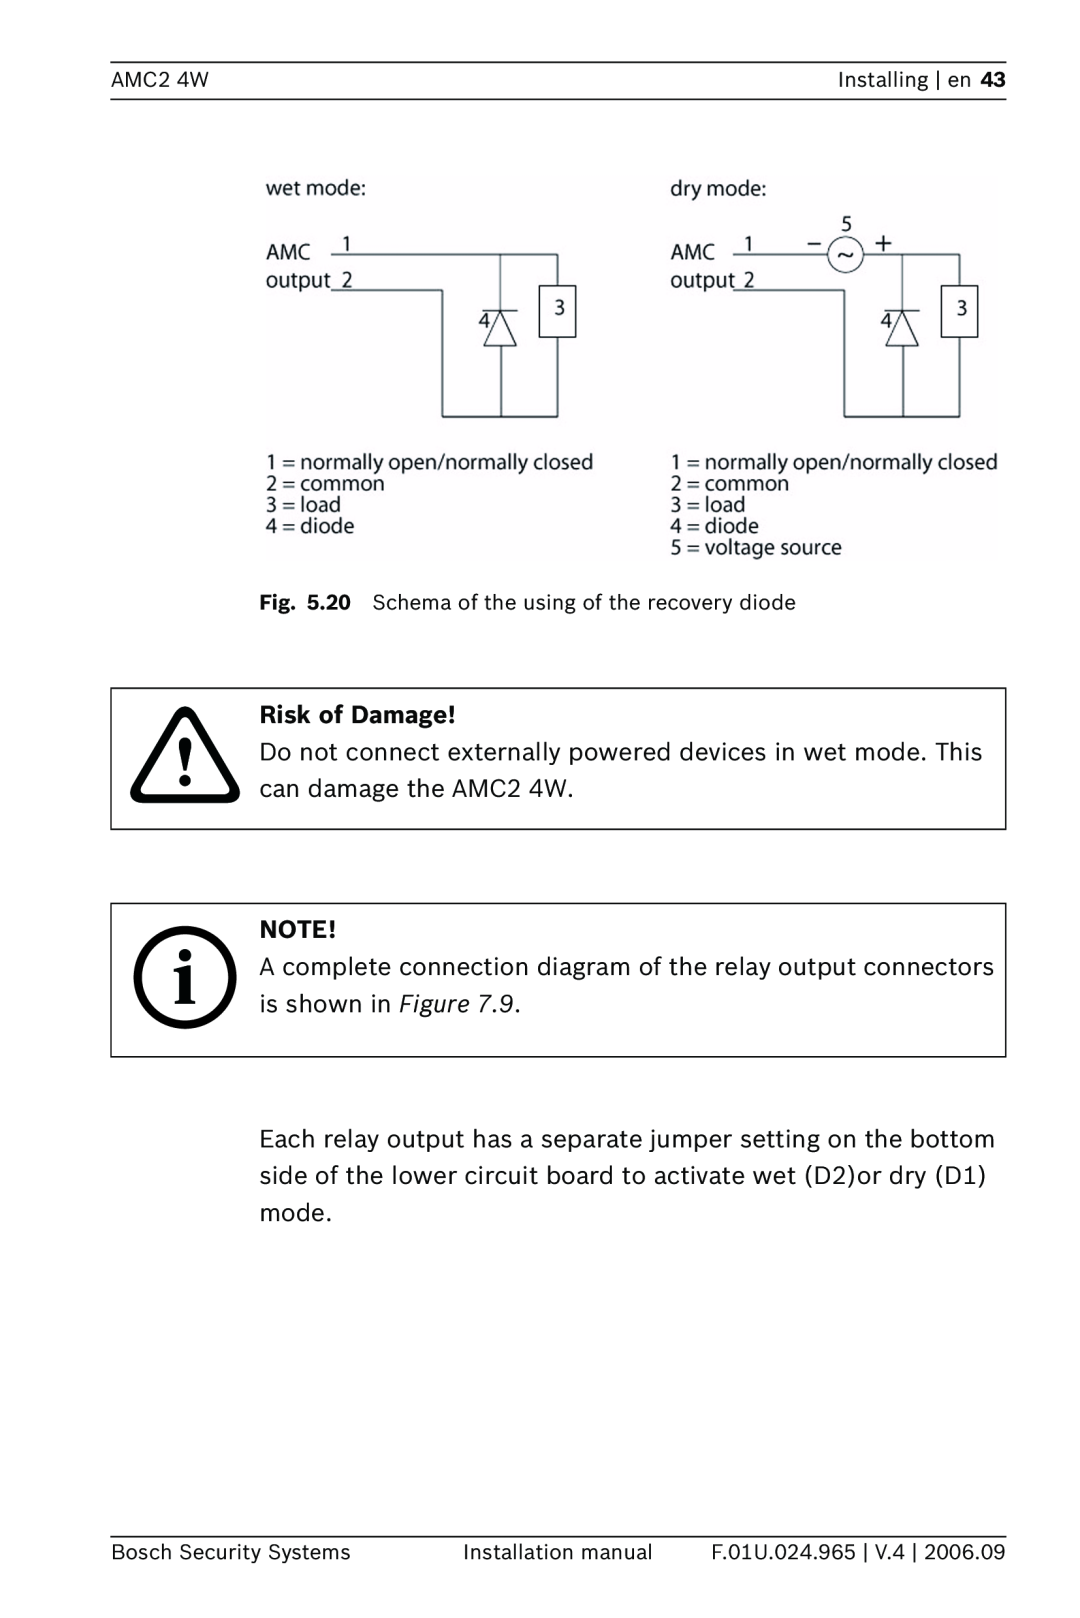 Bosch Appliances APC-AMC2-4WCF, APC-AMC2-4WUS installation manual Risk of Damage 